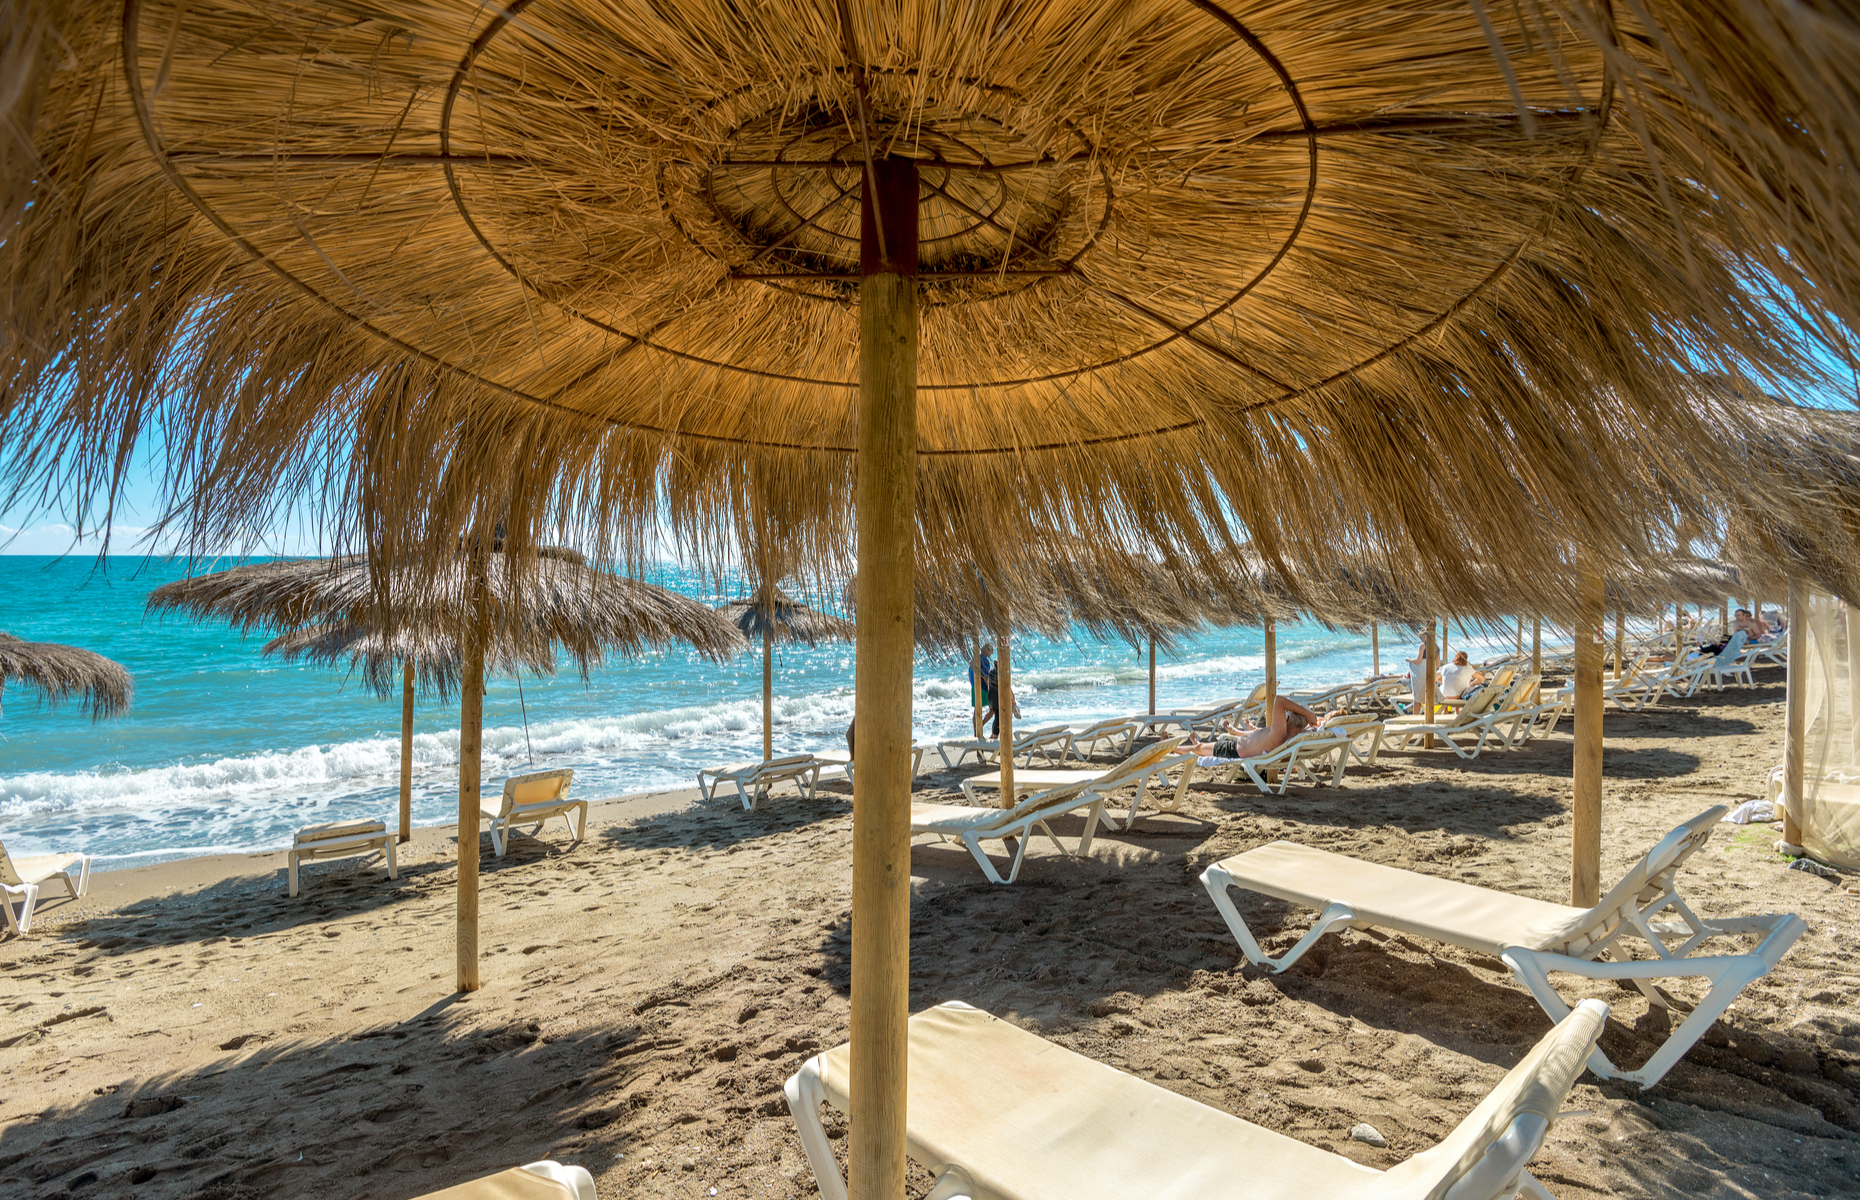 Sun loungers at Malaga beach